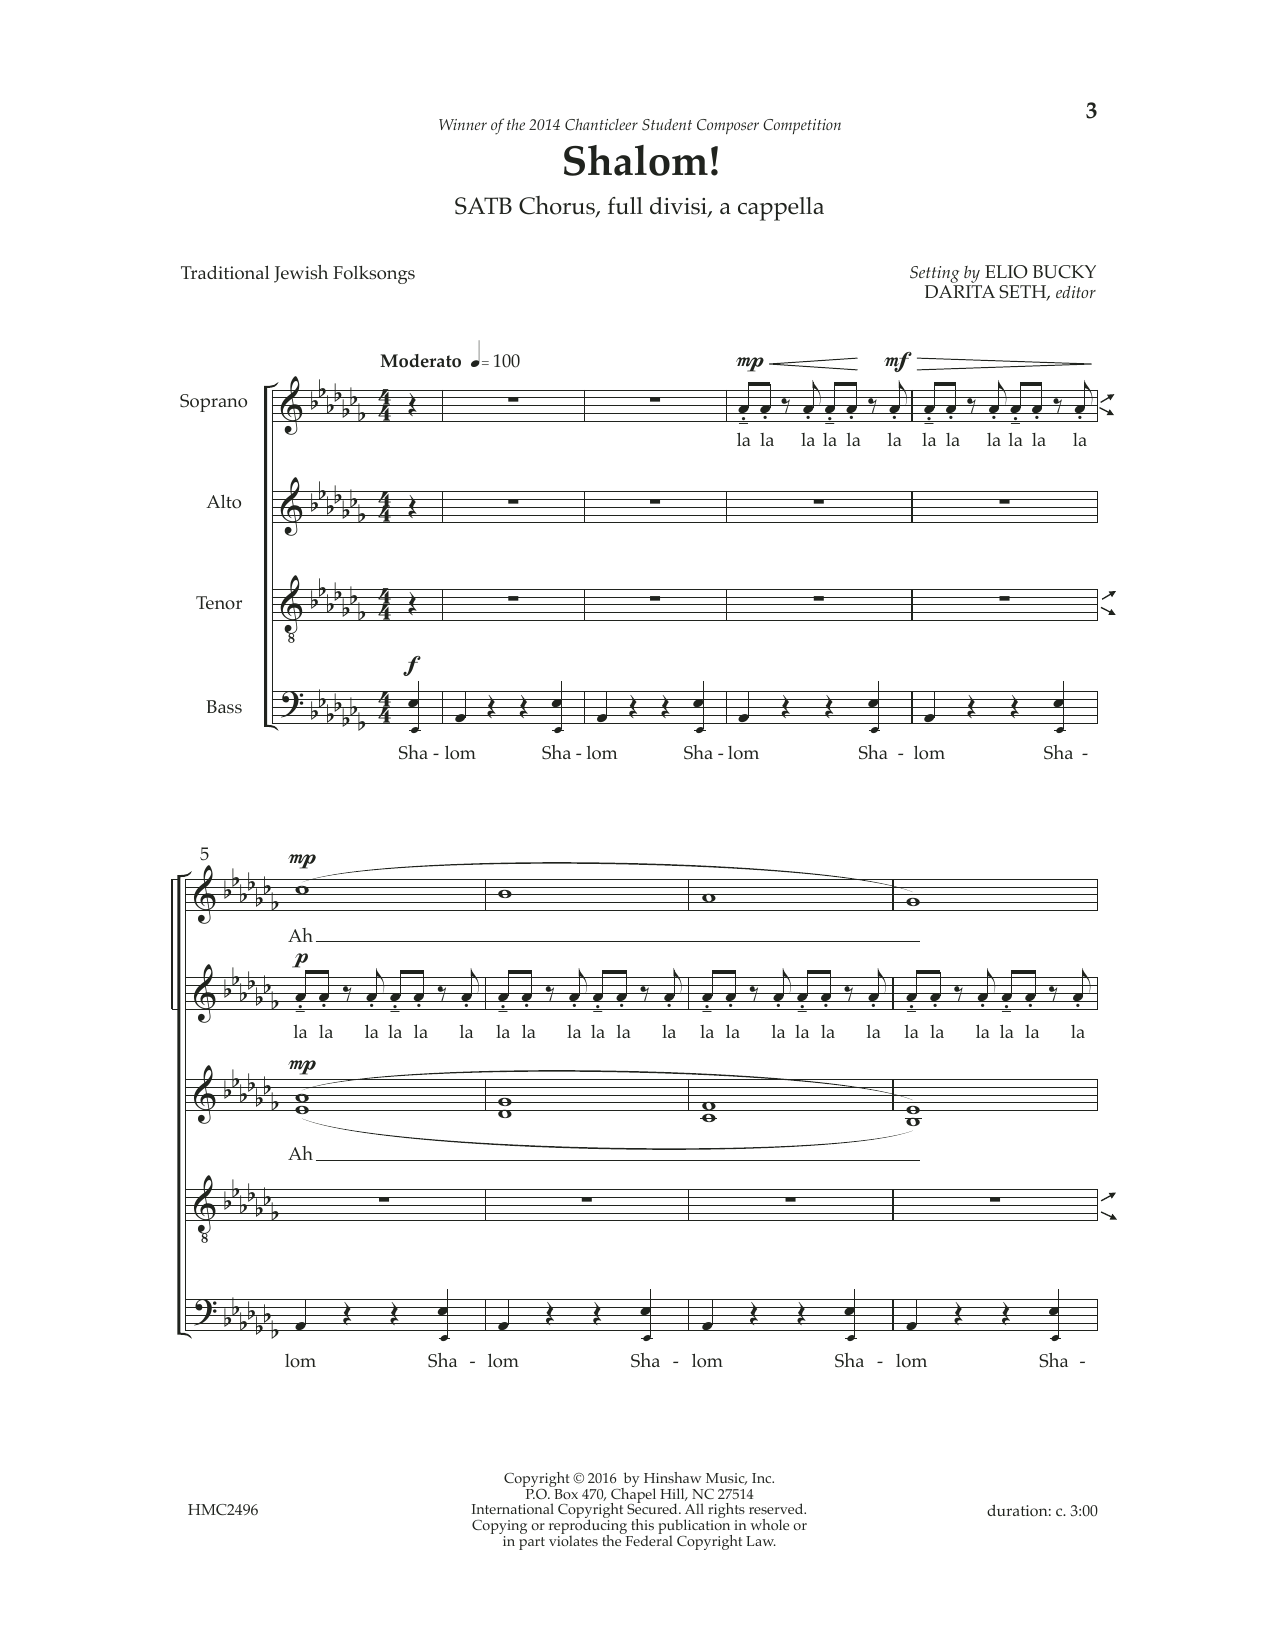 Download Elio Bucky Shalom (ed. Darita Seth) Sheet Music and learn how to play SATB Choir PDF digital score in minutes